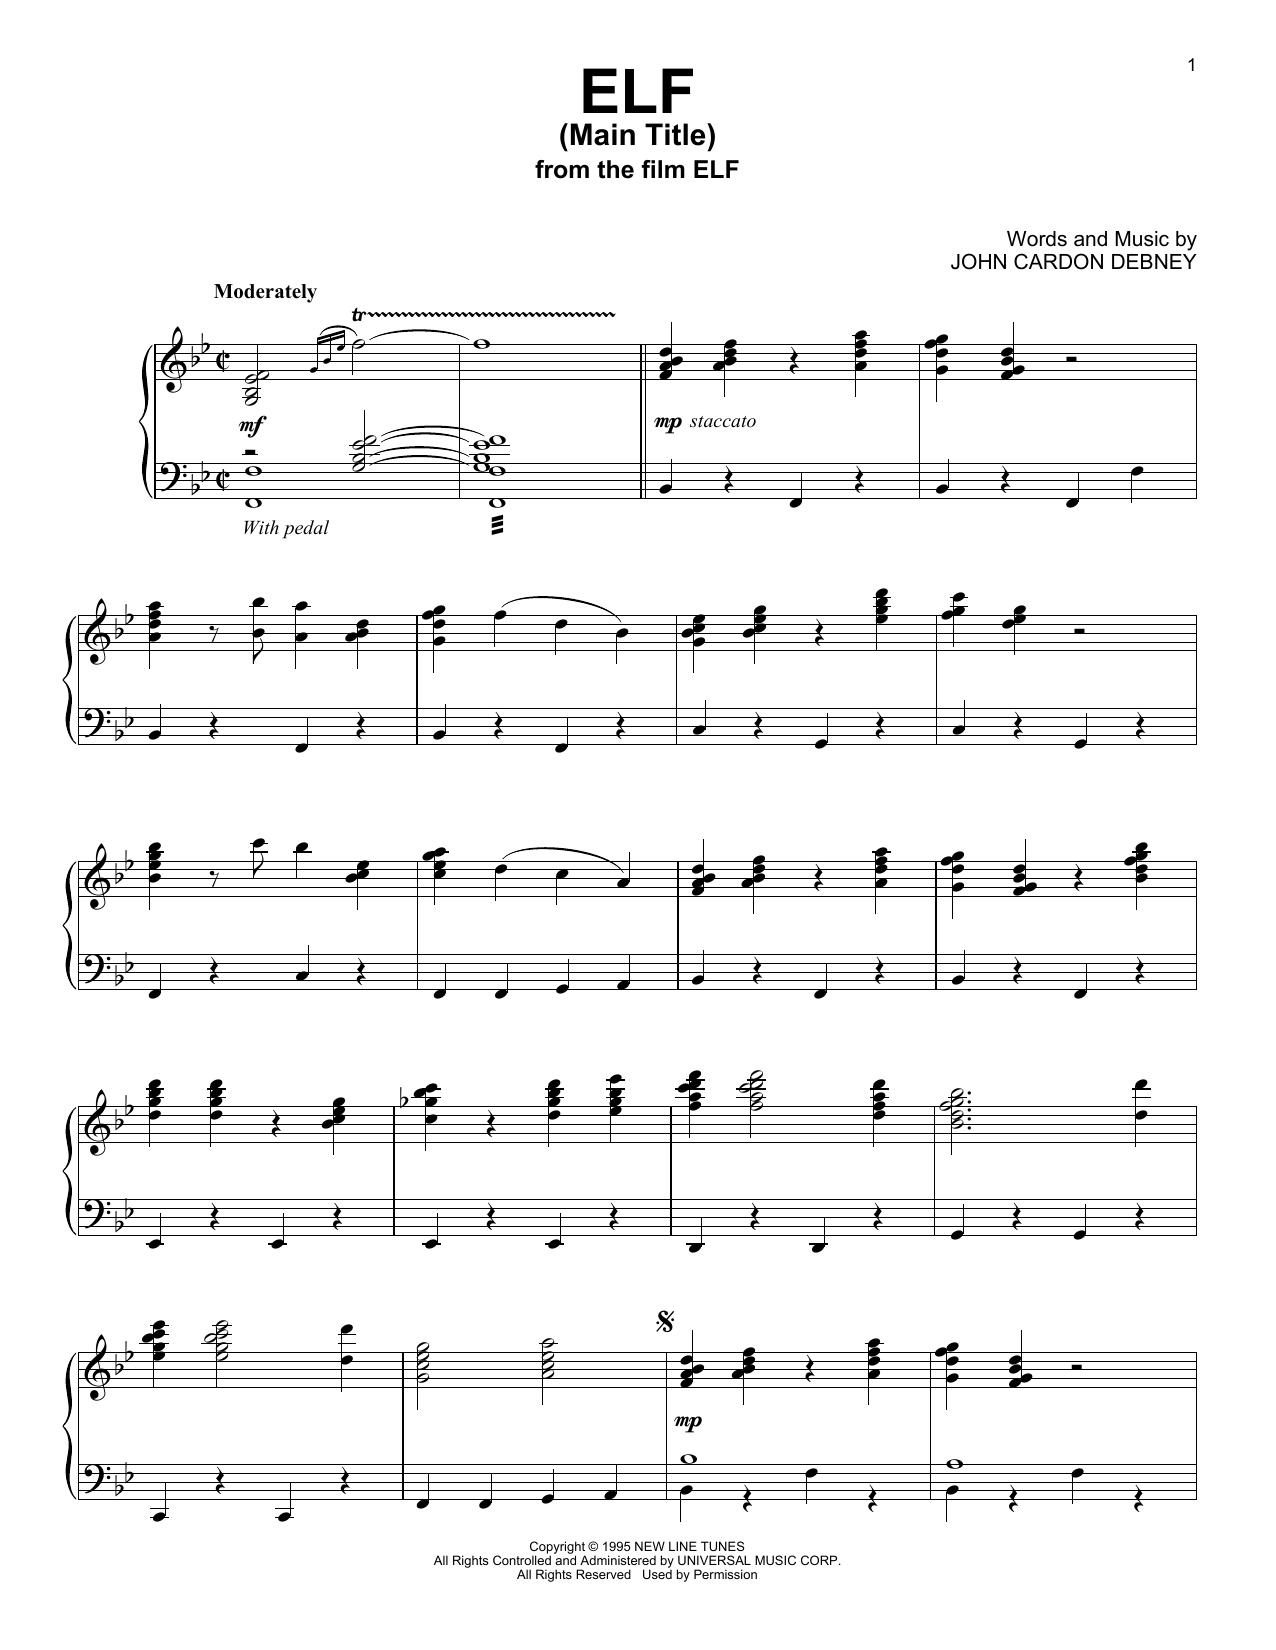 John Cardon Debney Elf (Main Title) Sheet Music Notes & Chords for Big Note Piano - Download or Print PDF